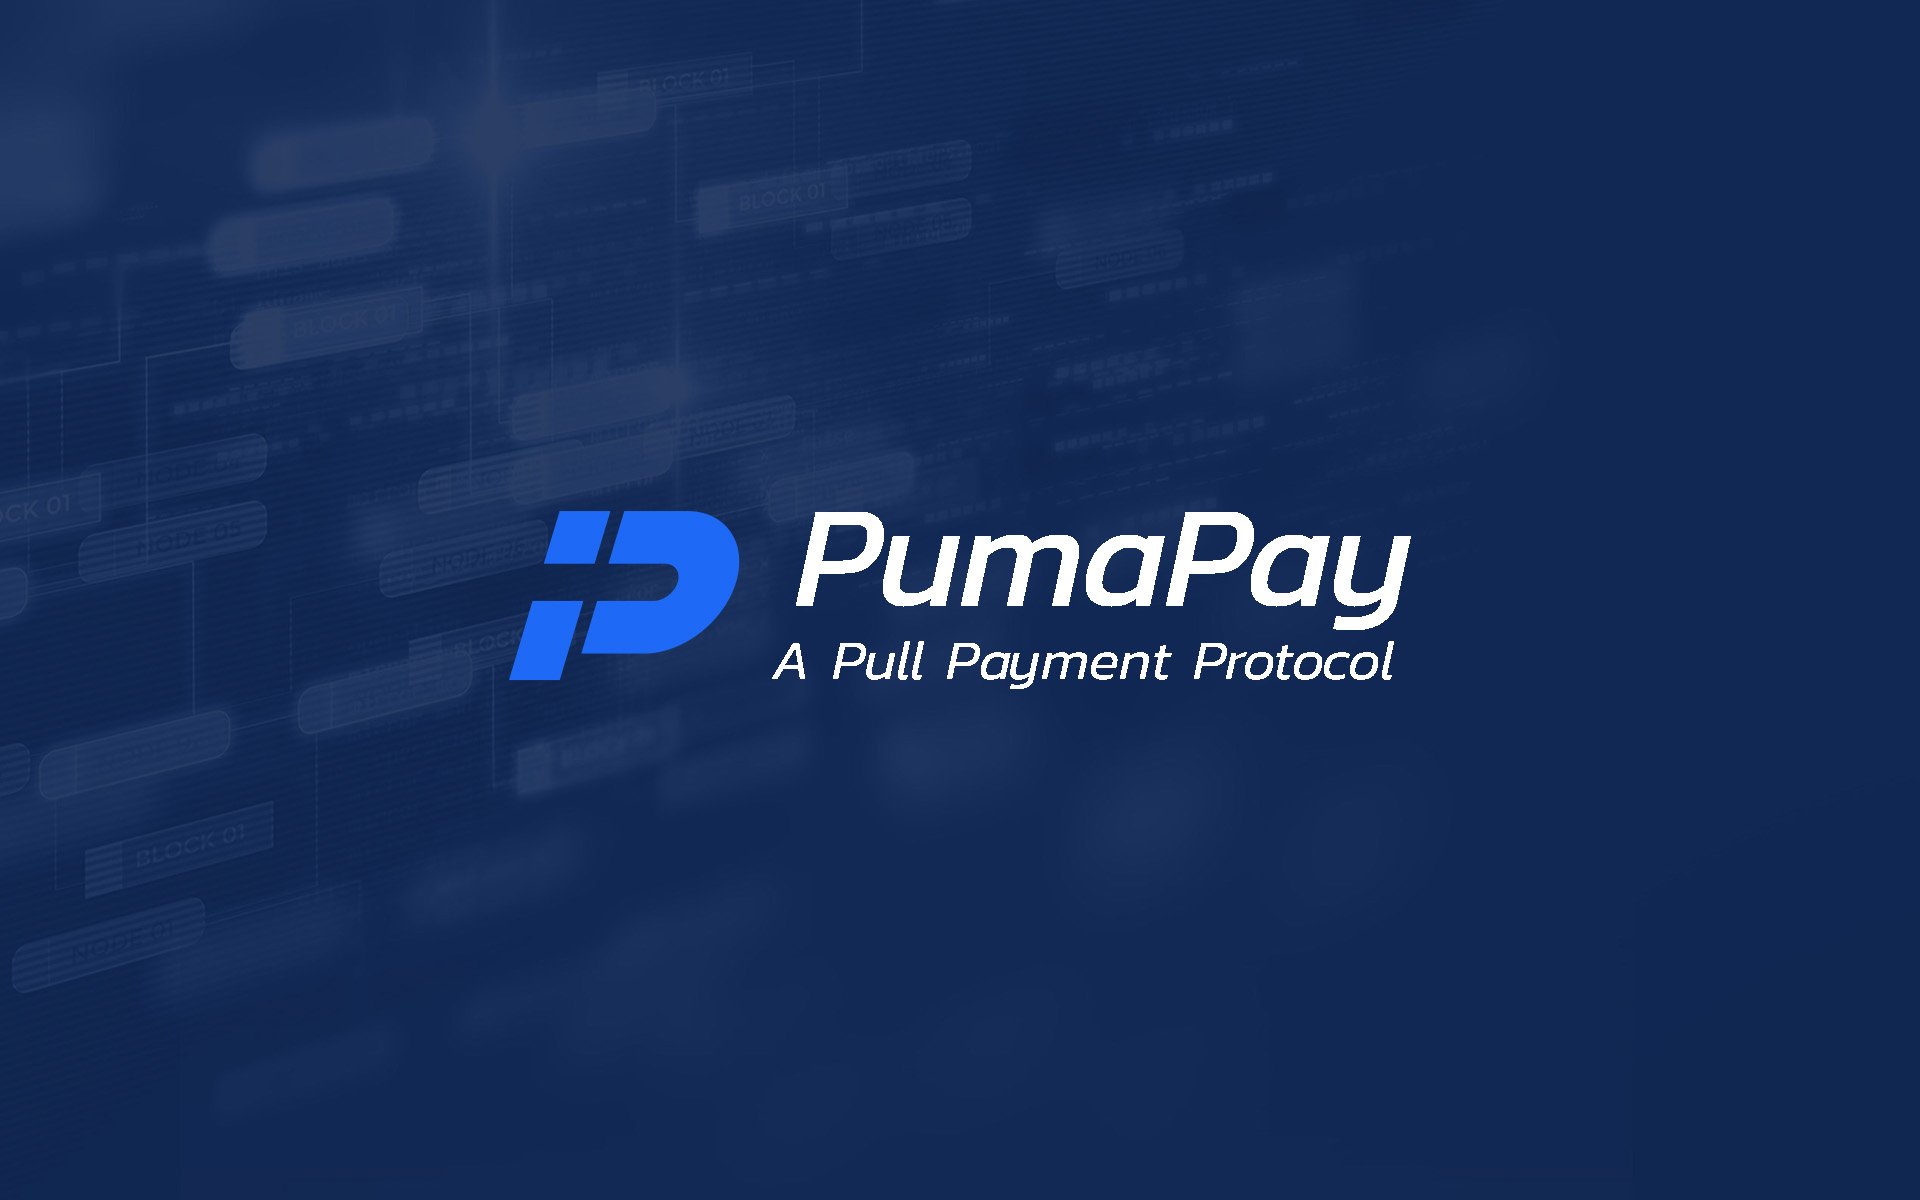 PumaPay Aims To Tackle Credit Card Fraud, Protect Merchants And Save Consumers Money